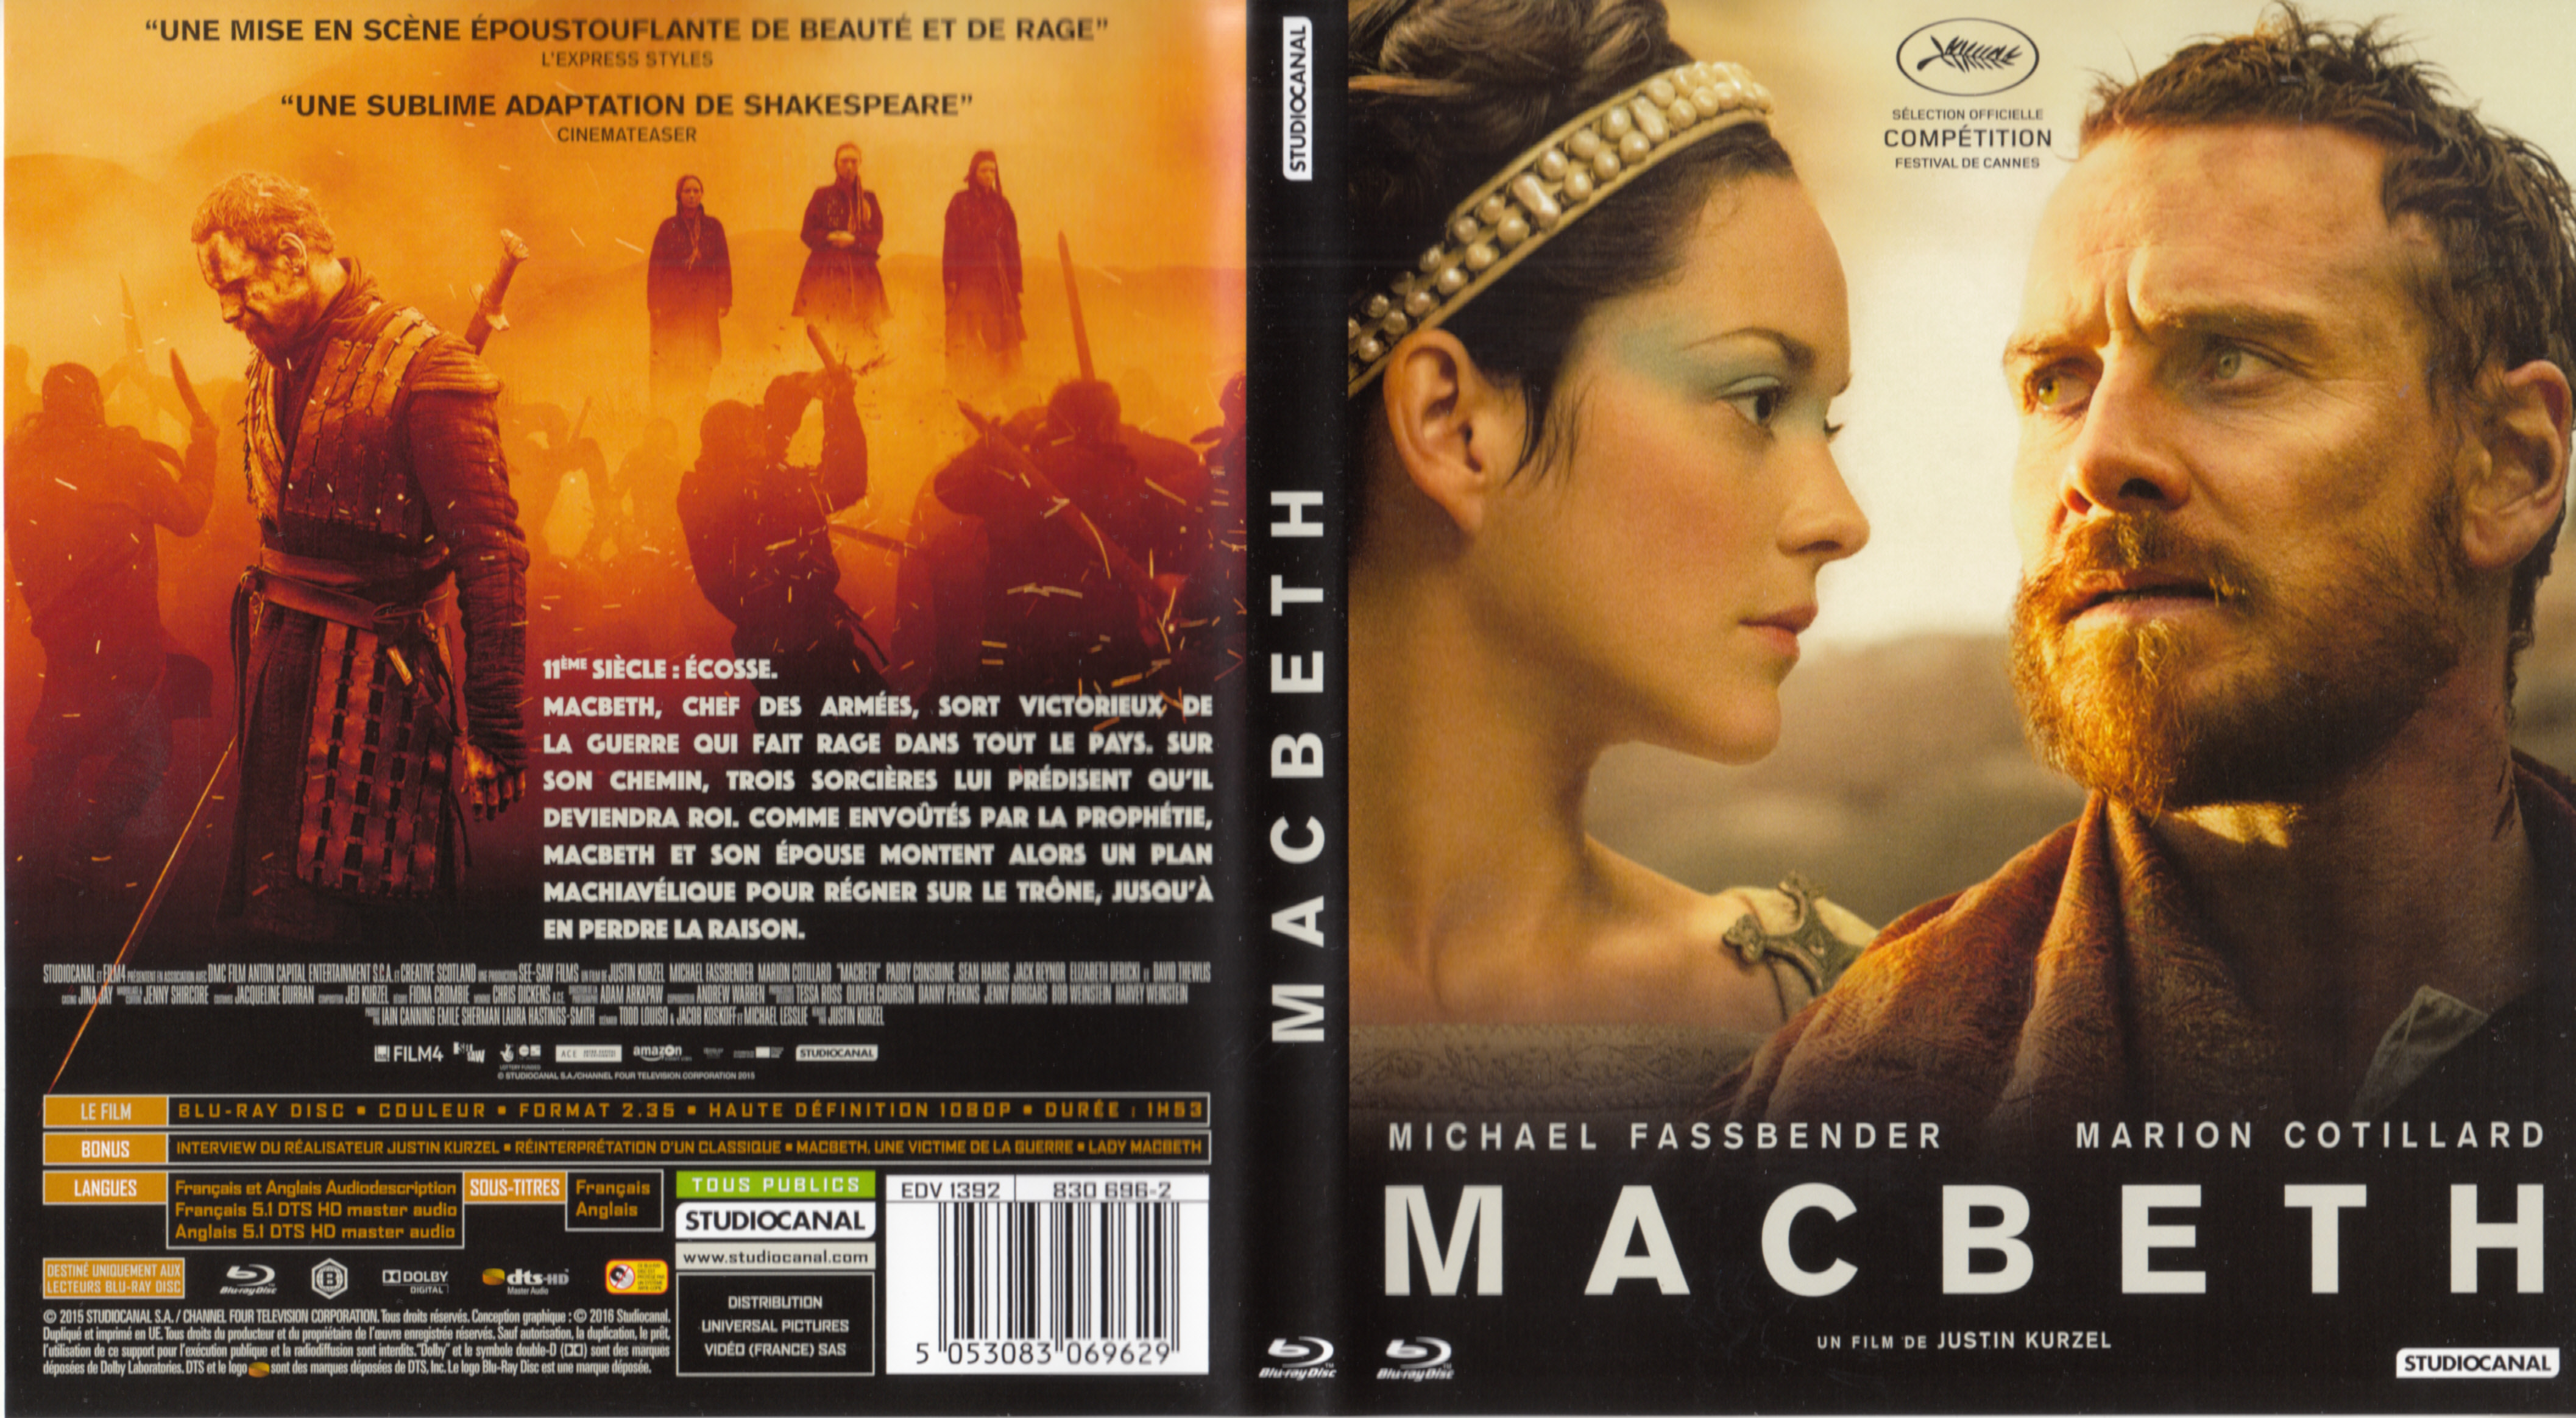 Jaquette DVD Macbeth 2015 (BLU-RAY) v2